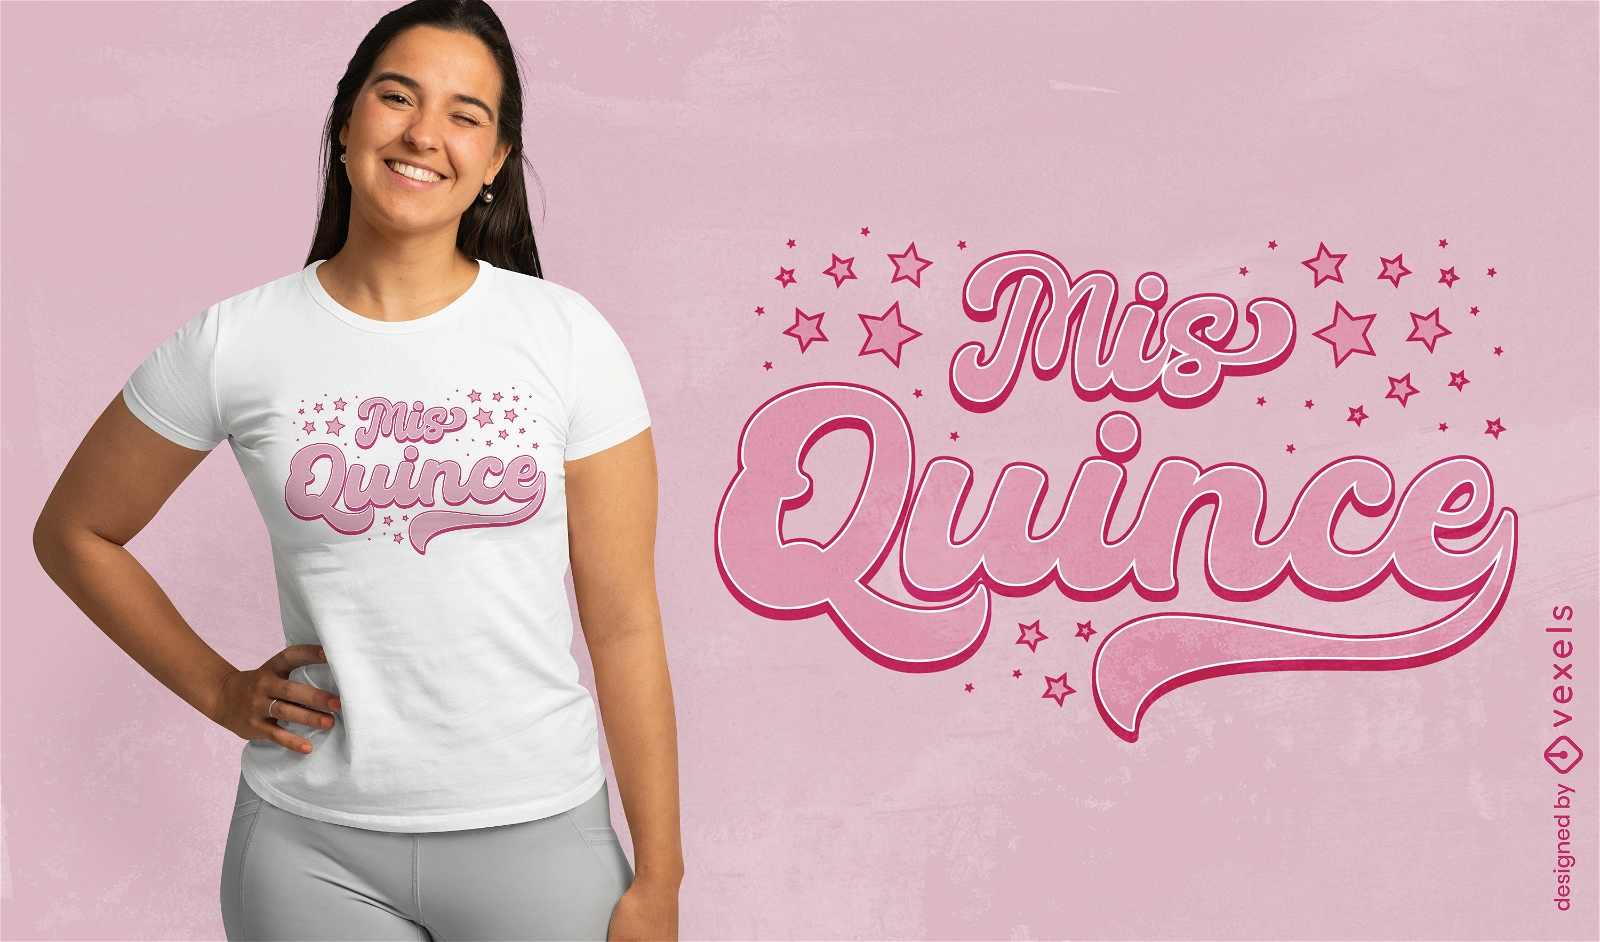 Design de camiseta com letras rosa Quicnea?era